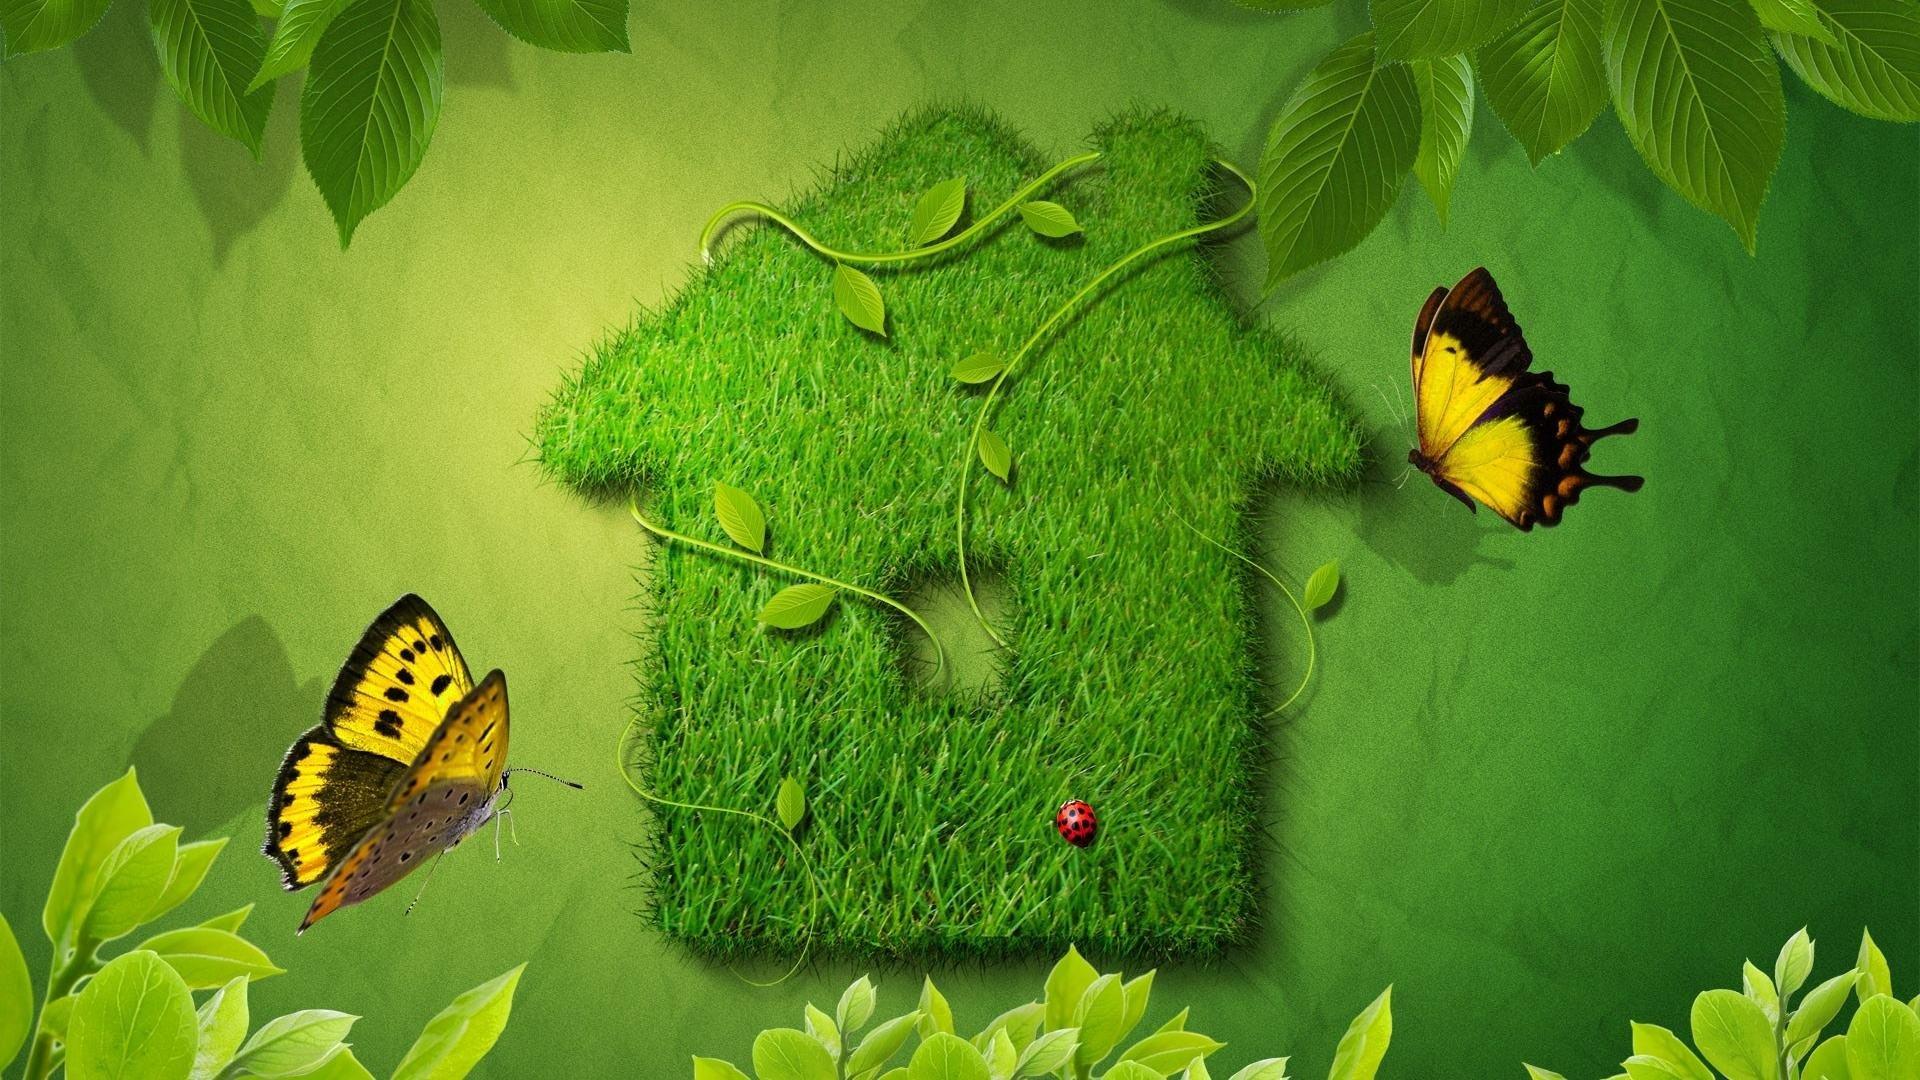 Eco Friendly wallpaper by babuv24  Download on ZEDGE  08df